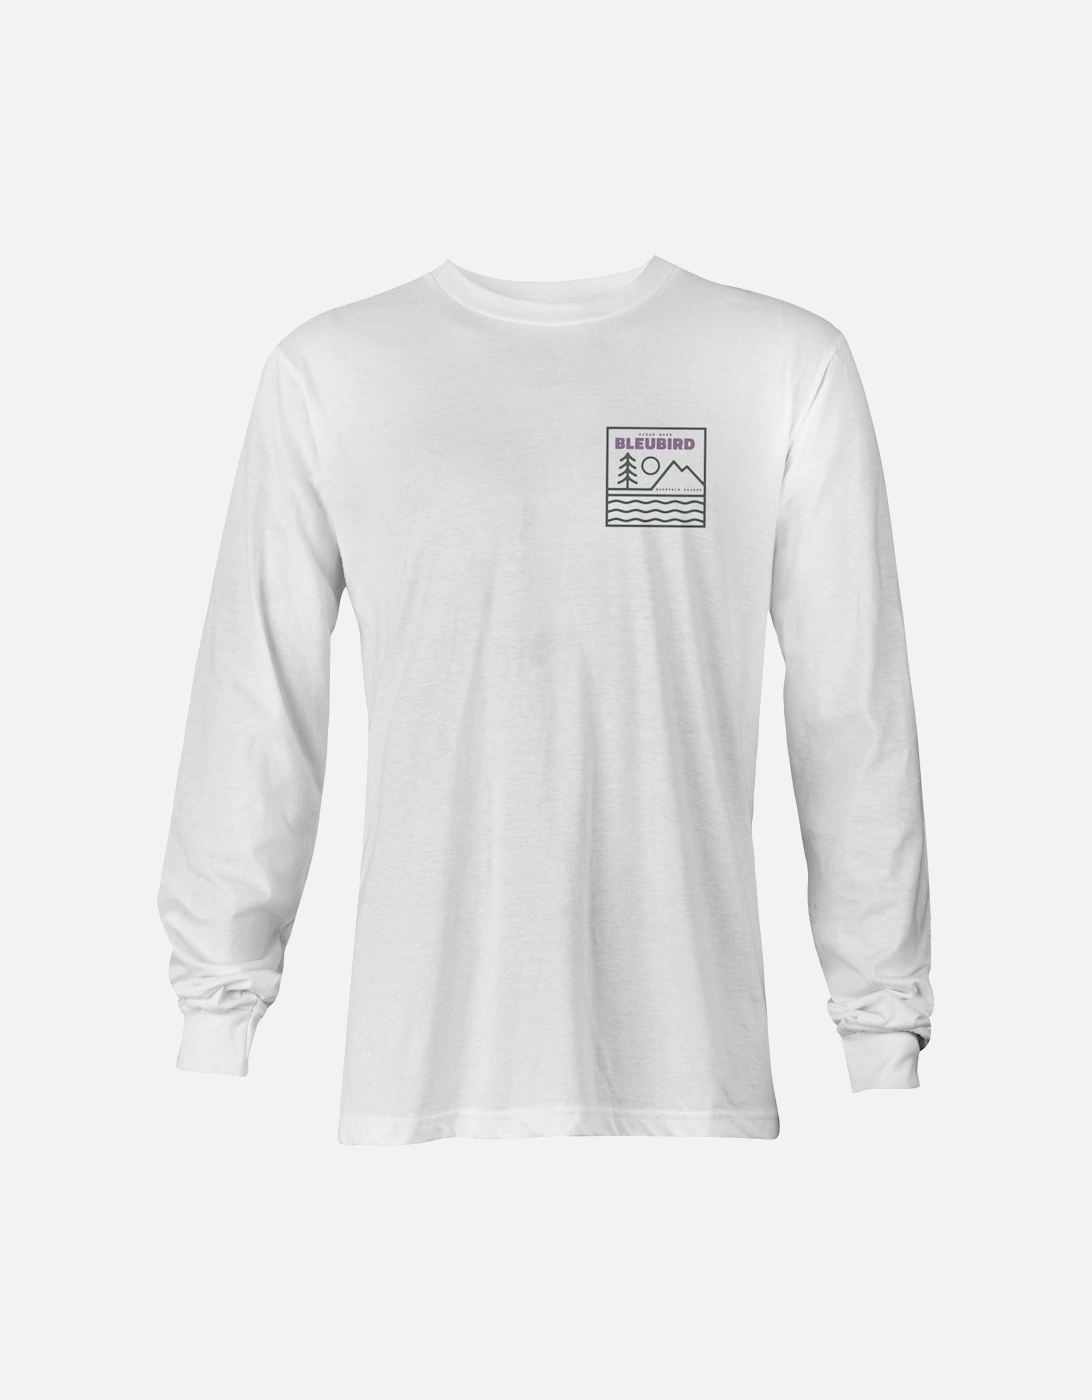 Unisex Campout Long Sleeve T-Shirt - White